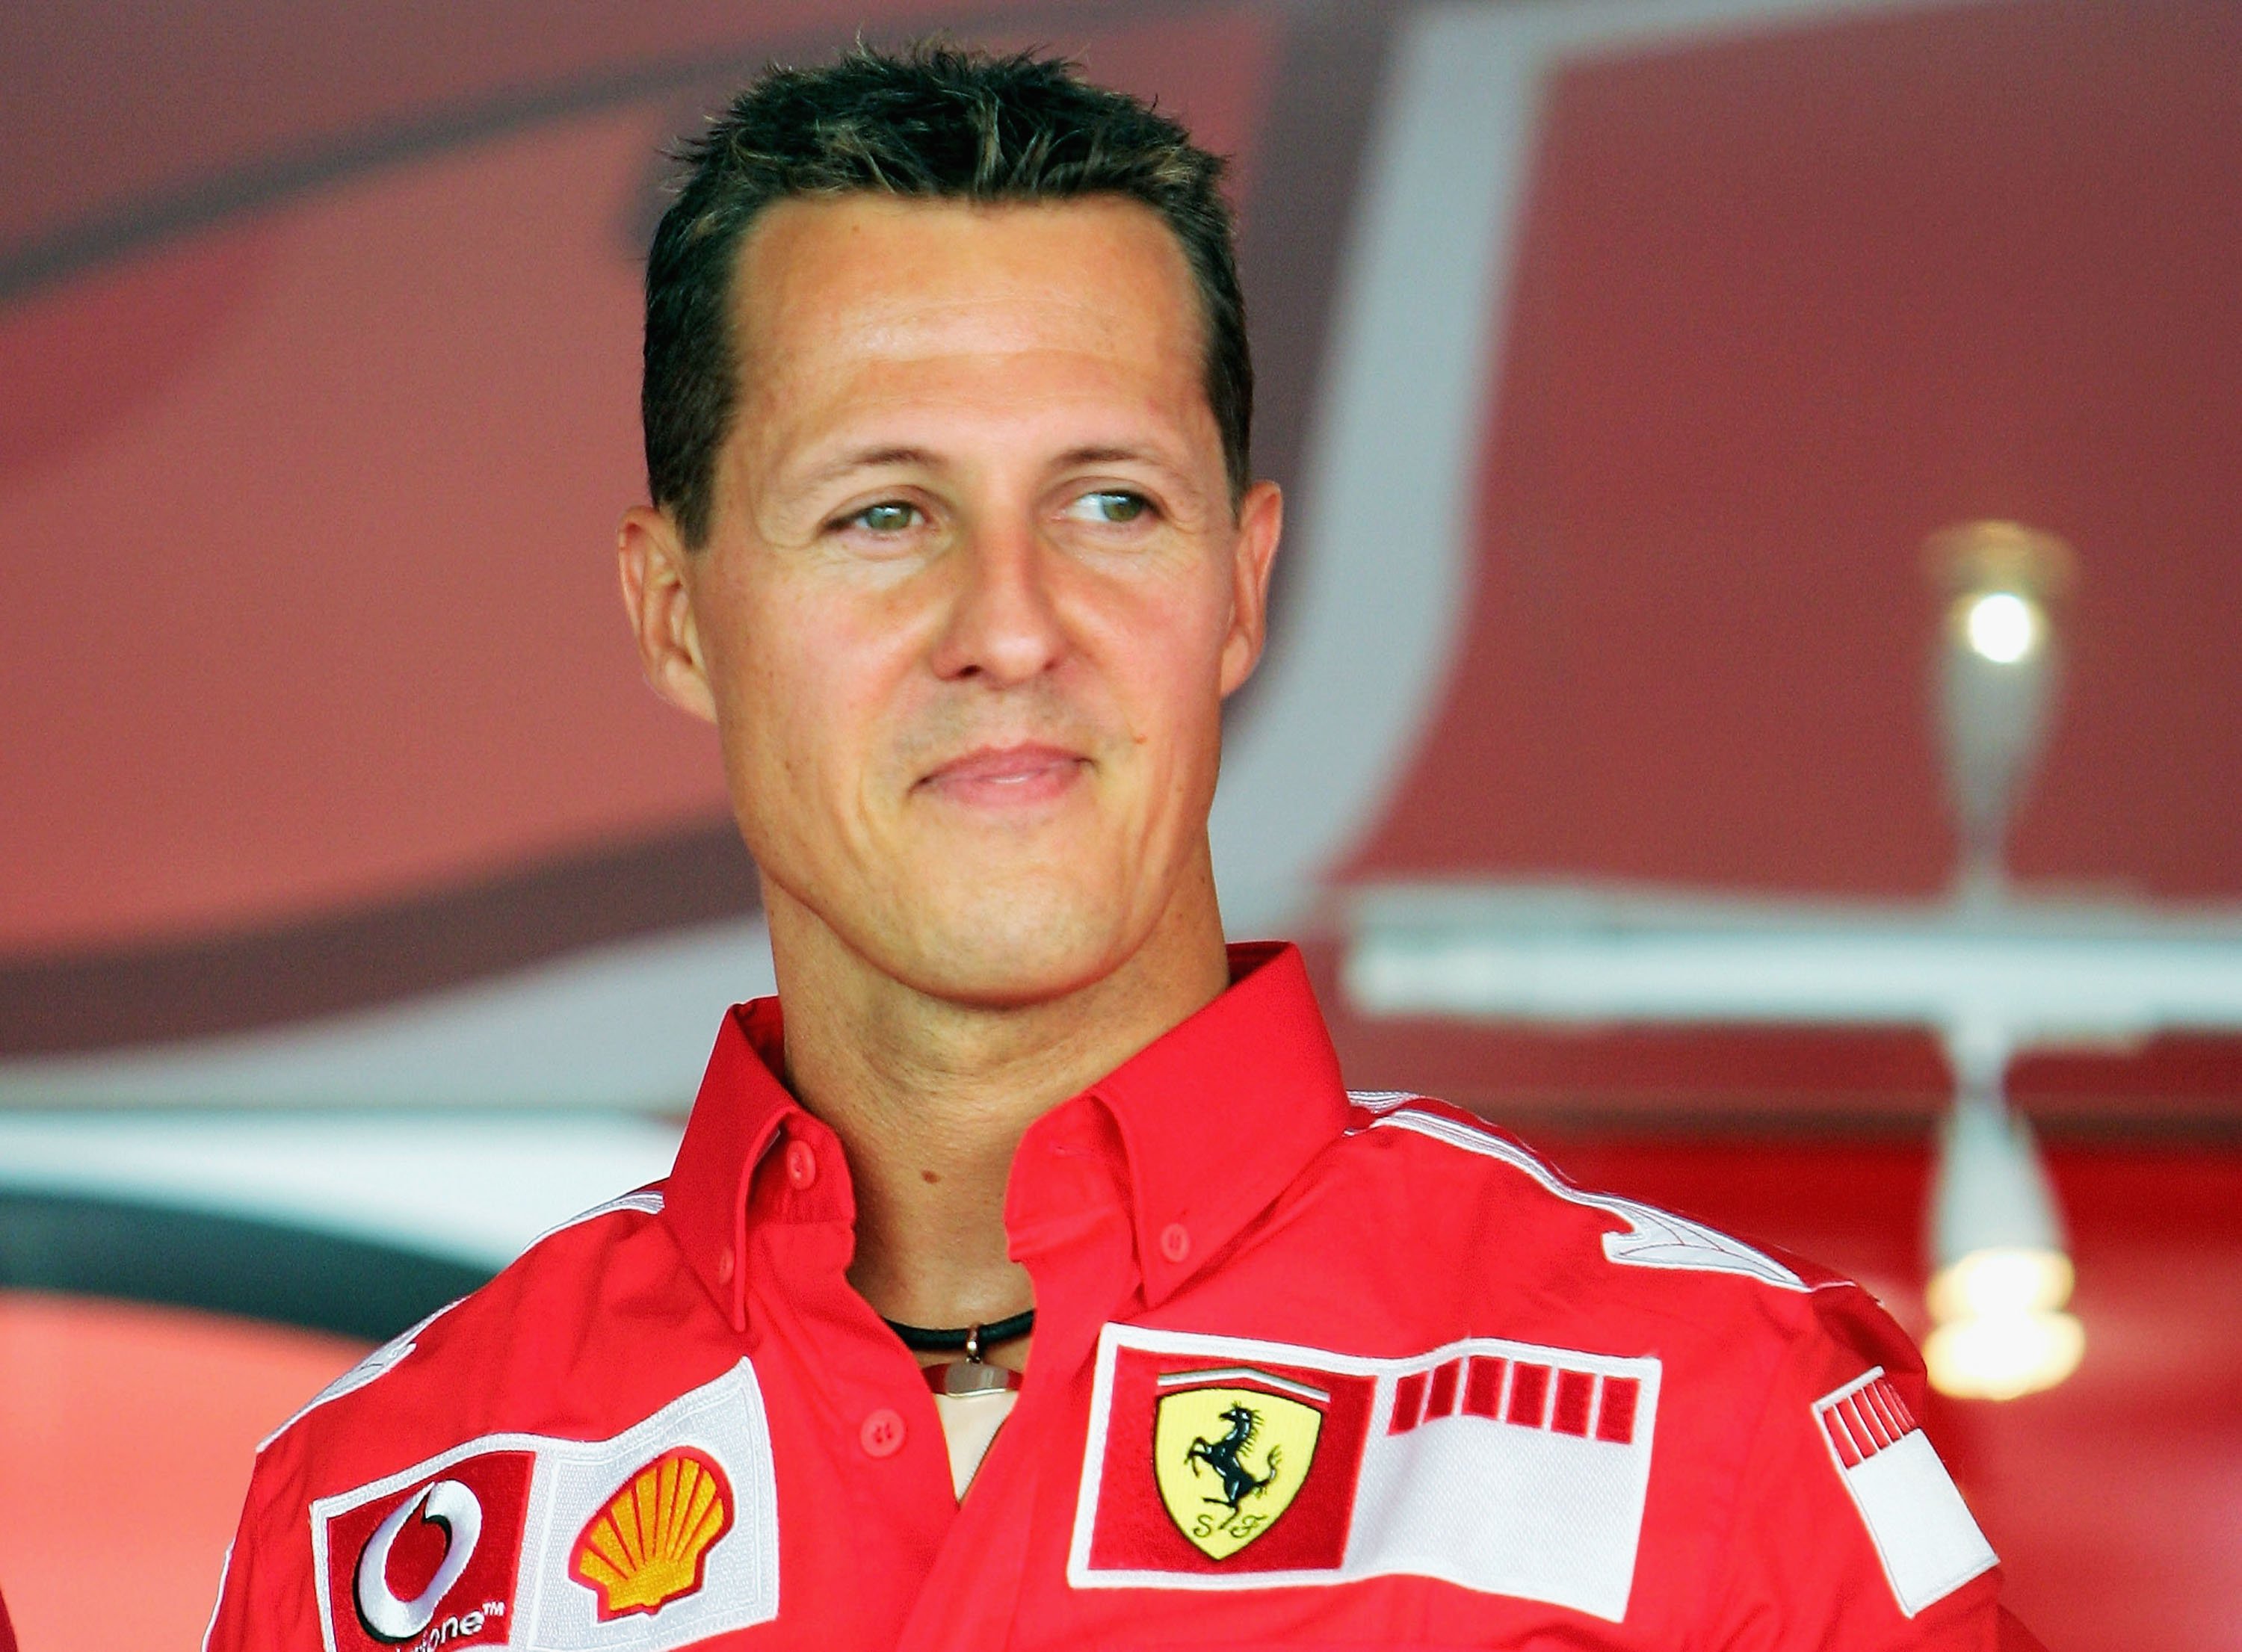 Michael Schumacher am 1. September 2005 in Monza, Italien. | Quelle: Getty Images